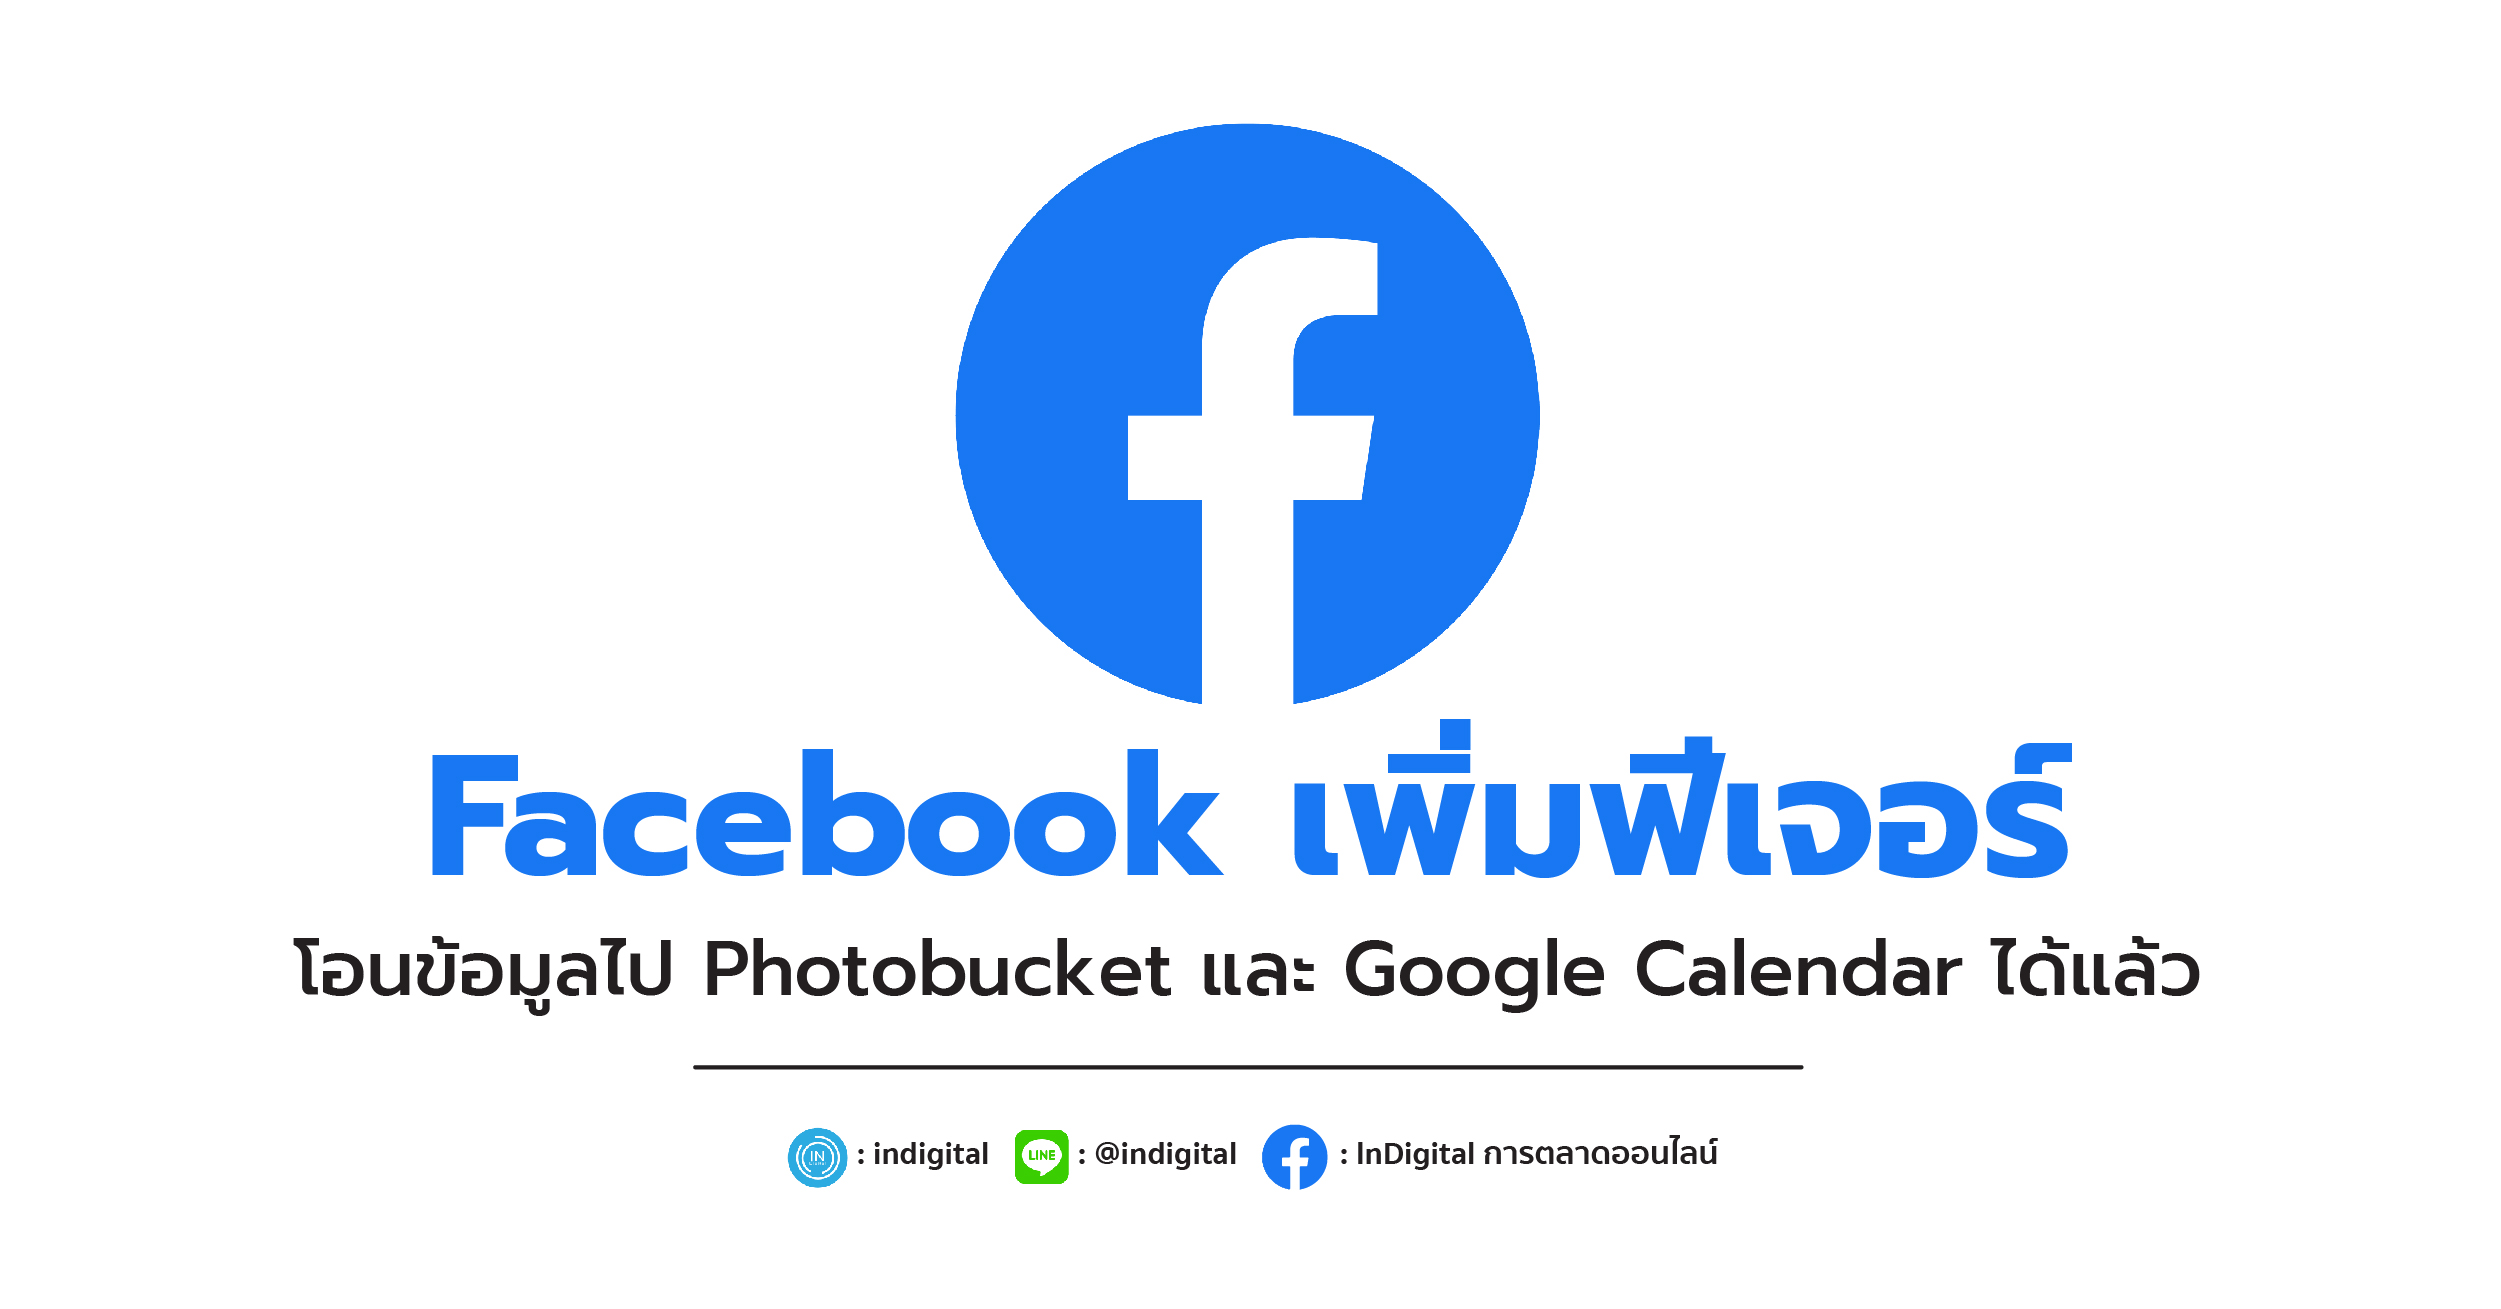 Facebook เพิ่มฟีเจอร์ โอนข้อมูลไป Photobucket และ Google Calendar ได้แล้ว